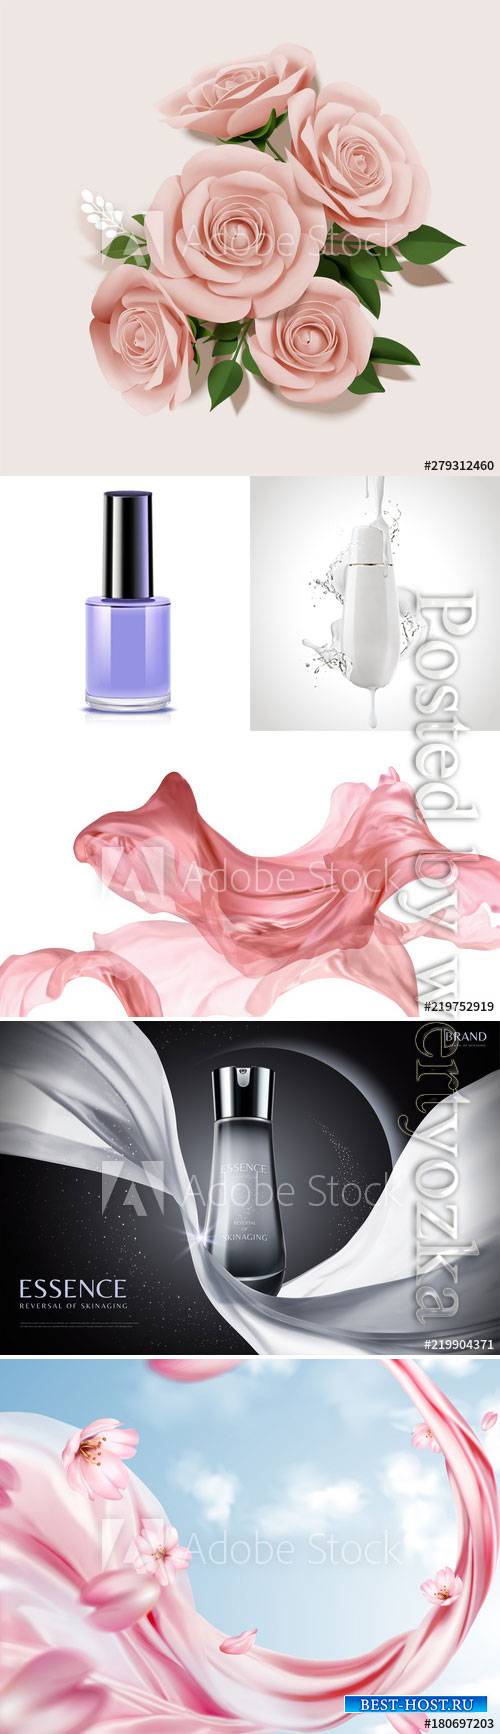 Cosmetics advertising vector posters, perfume, cream, nail polish # 5